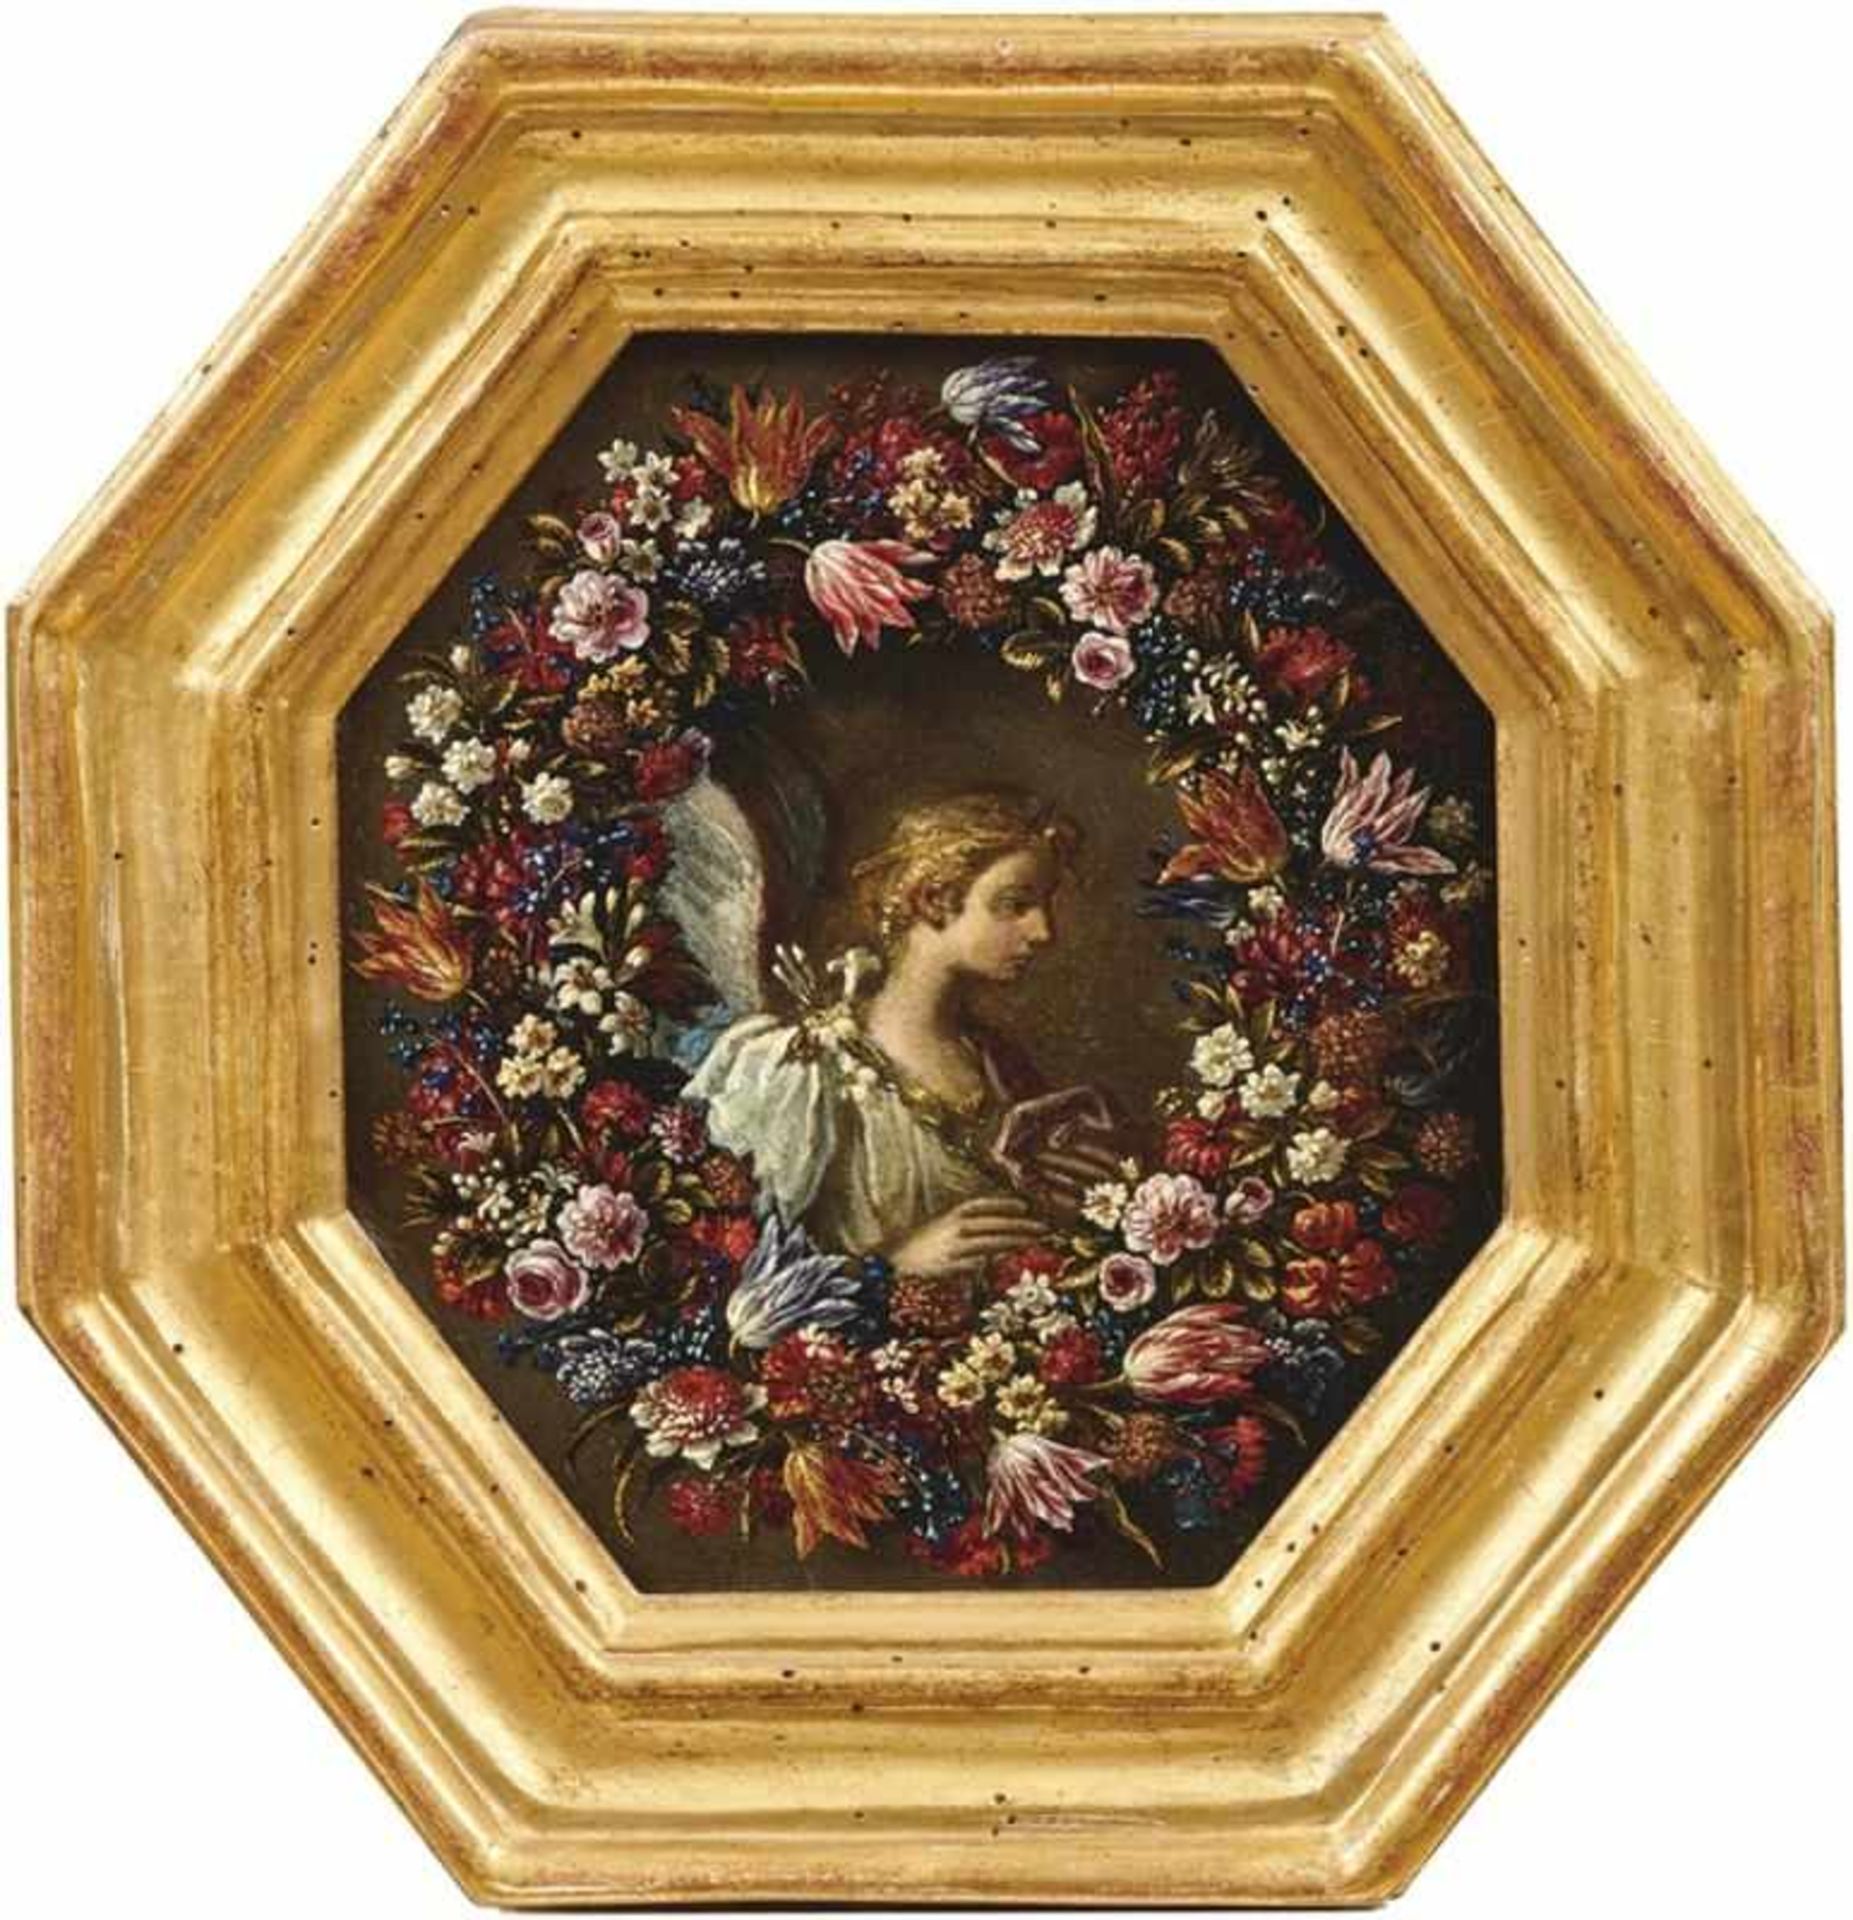 Brueghel, Abraham & Carlo Maratta - Attributed to